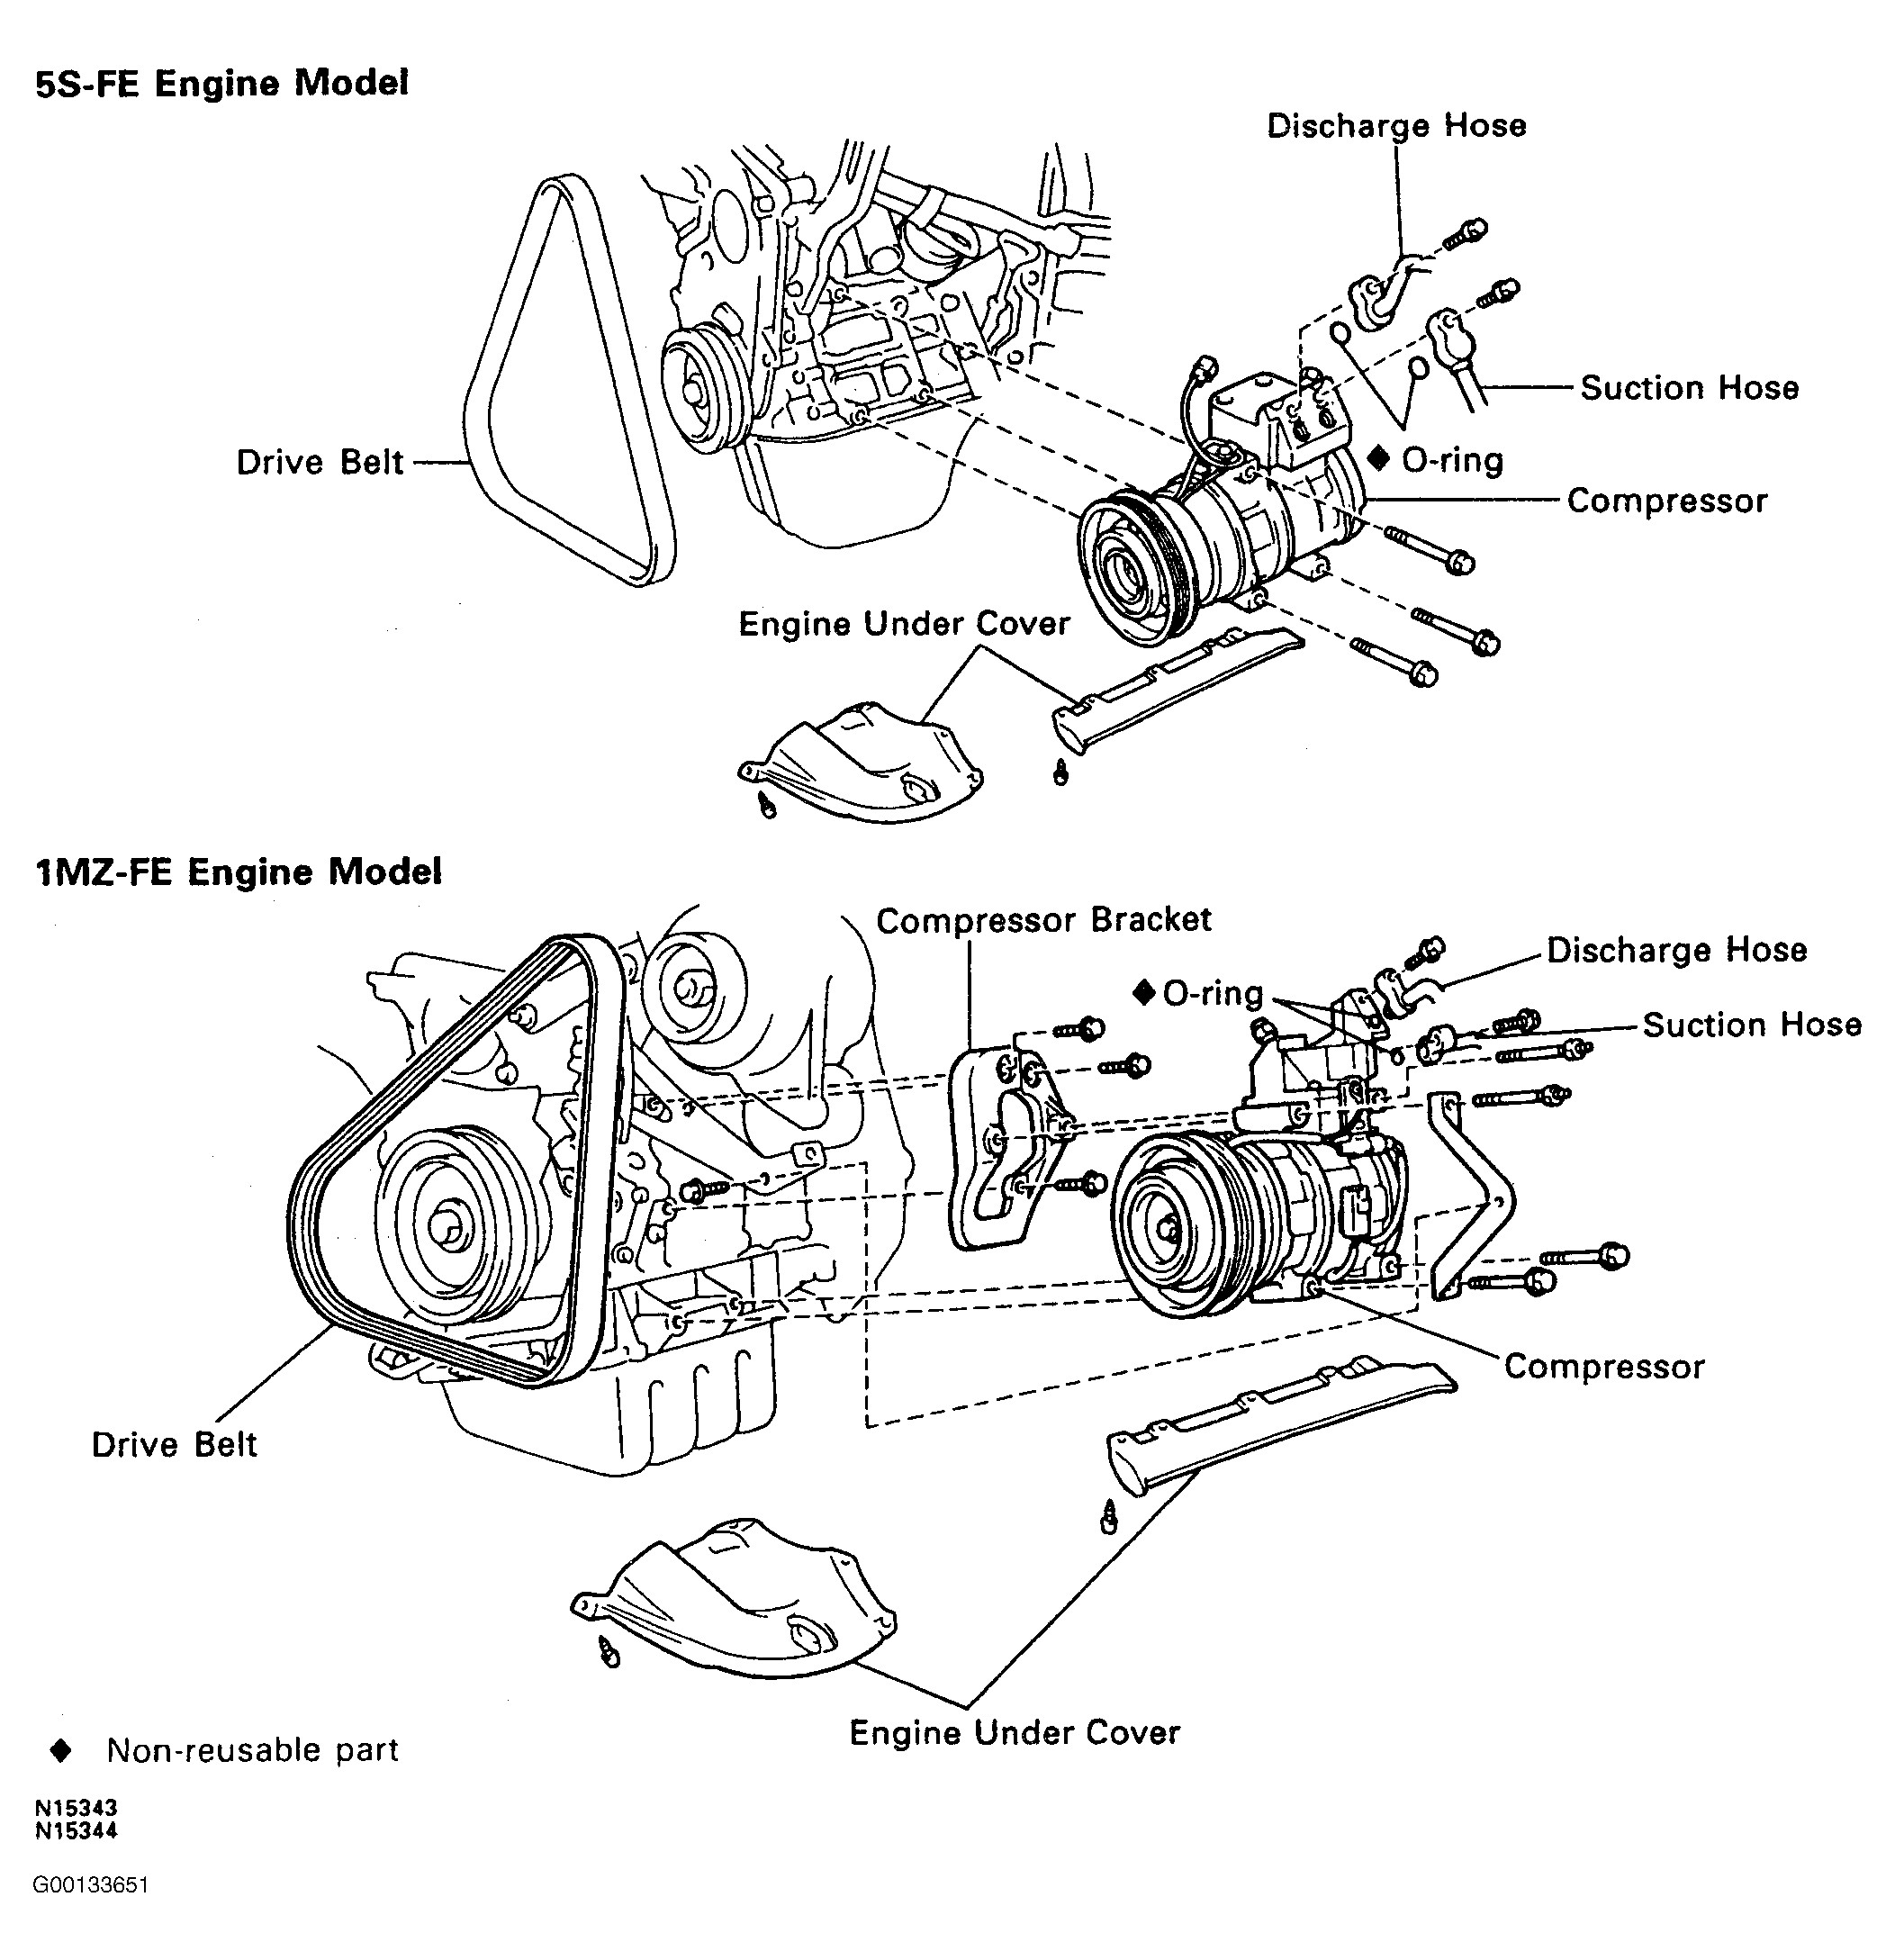 1995 Toyota Corolla Electrical Wiring Diagram from detoxicrecenze.com